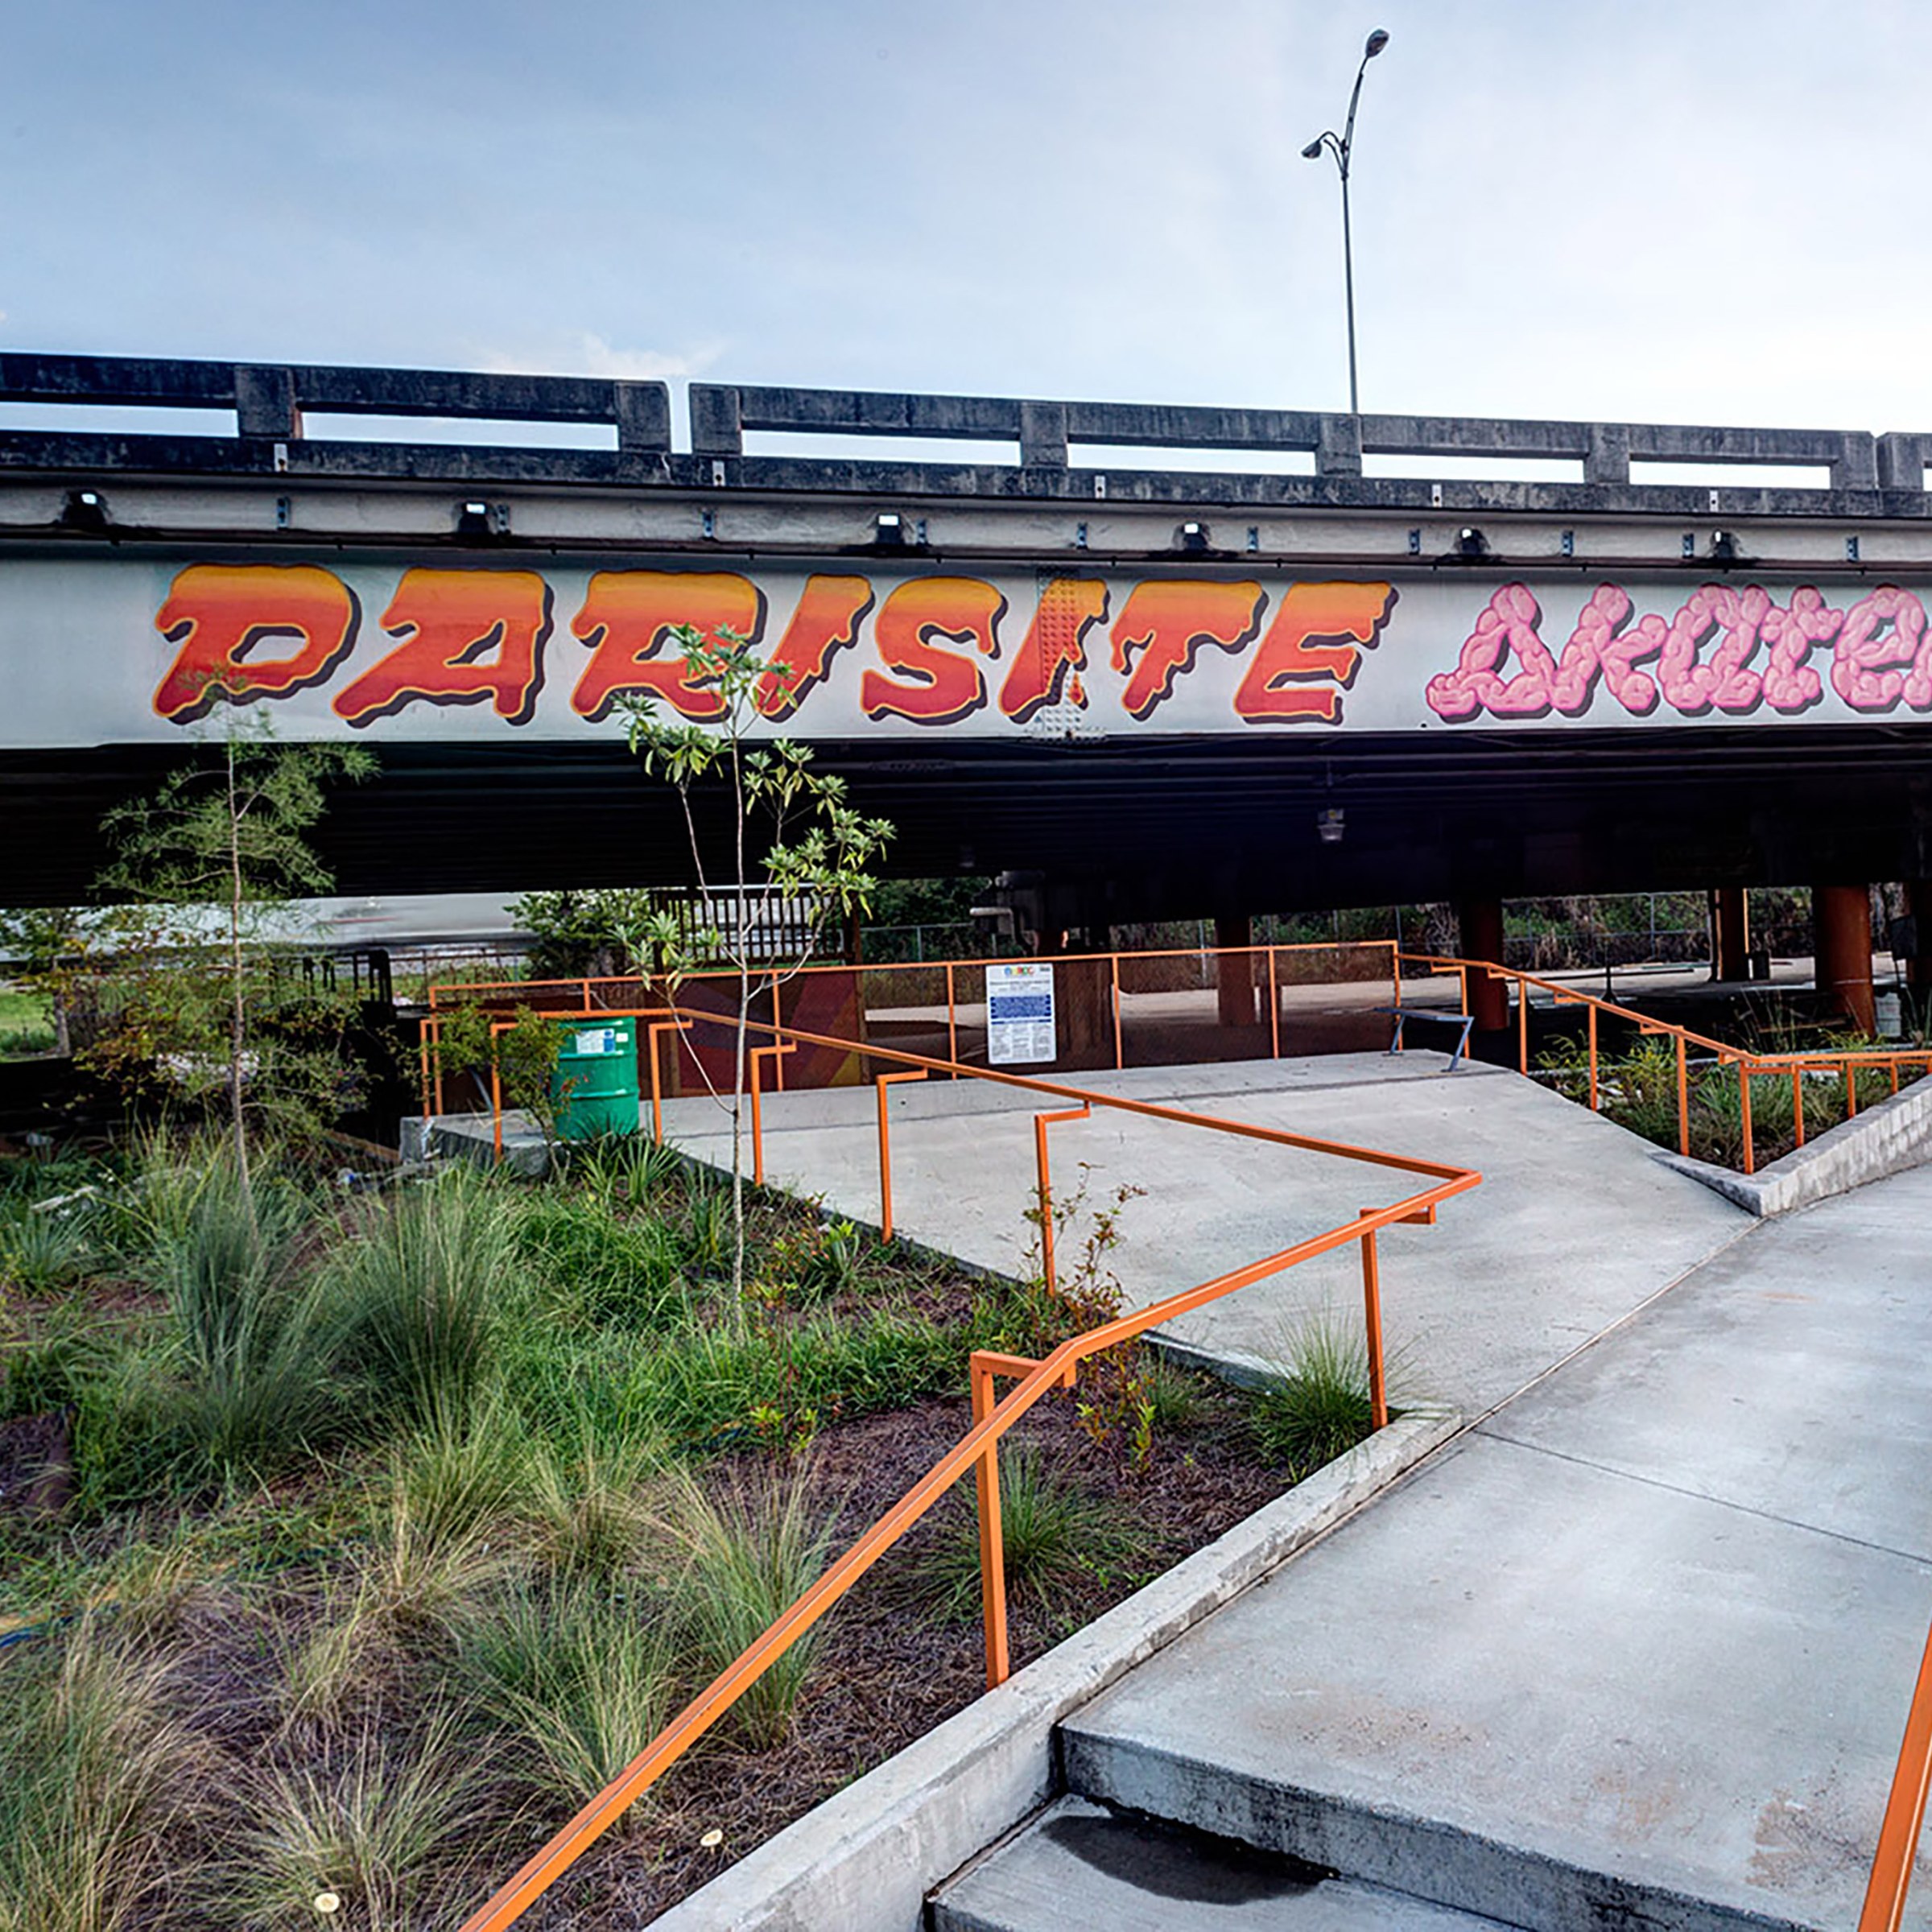 Photo of Parasite Skatepark with orange railings and greenery